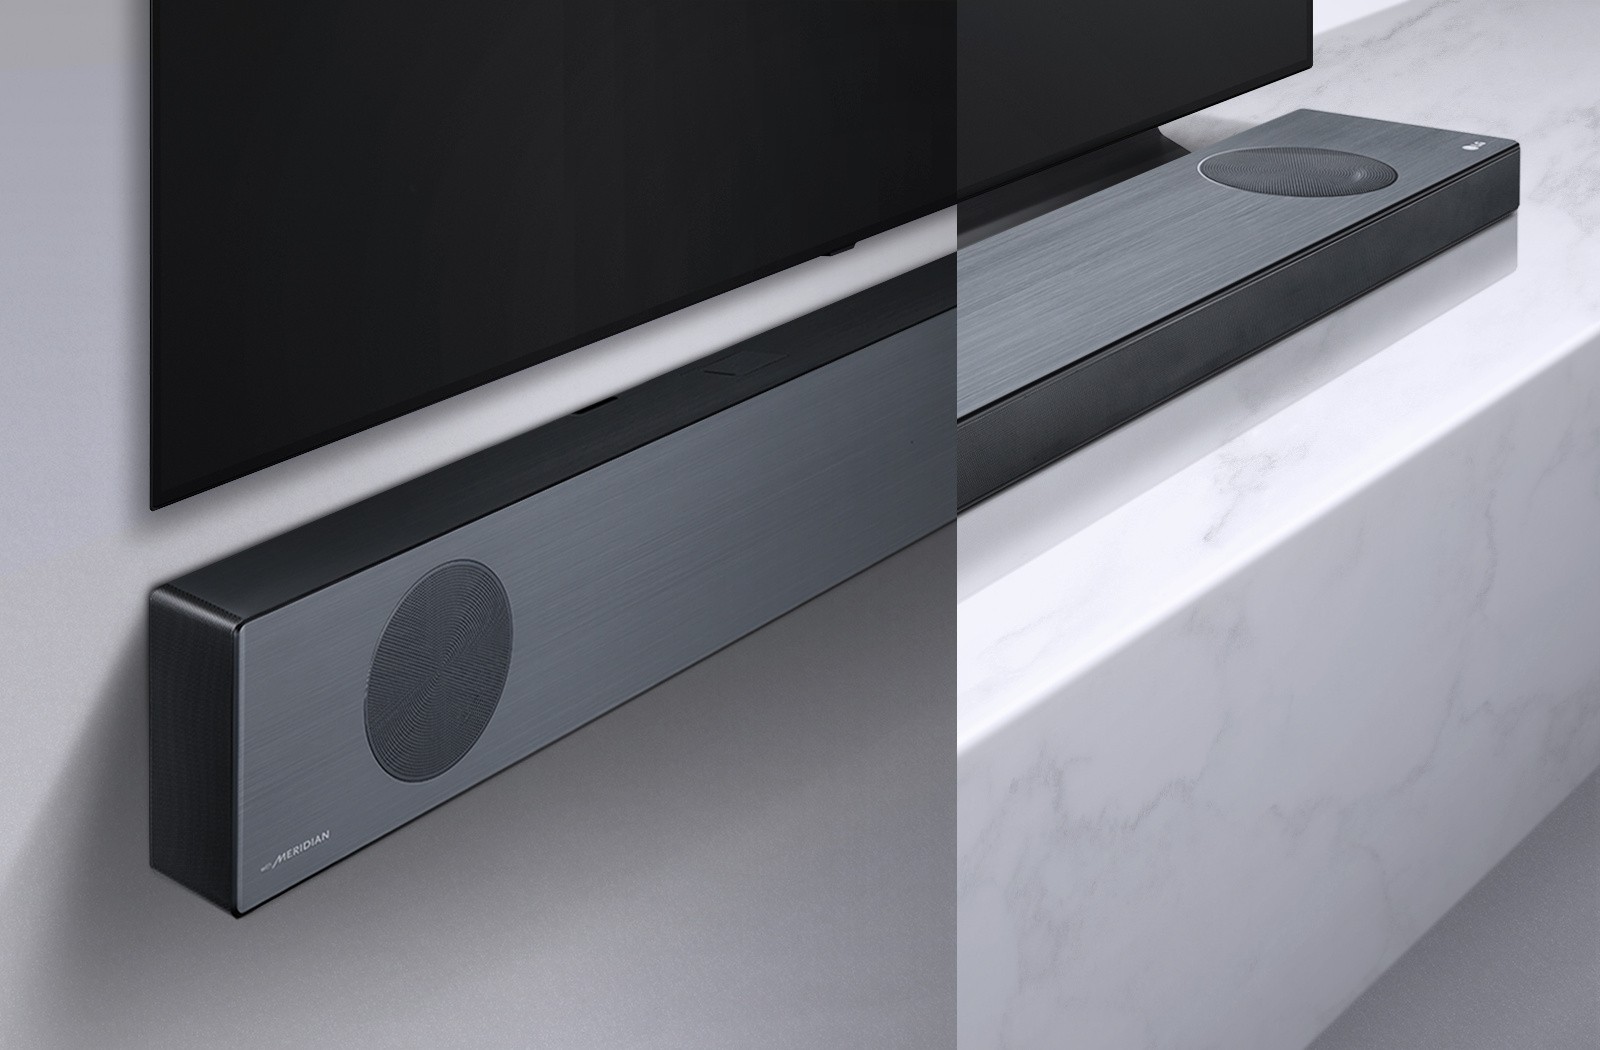 LG Soundbar model SL9YG fixed to a wall below an LG TV next to an image of it placed on a shelf.